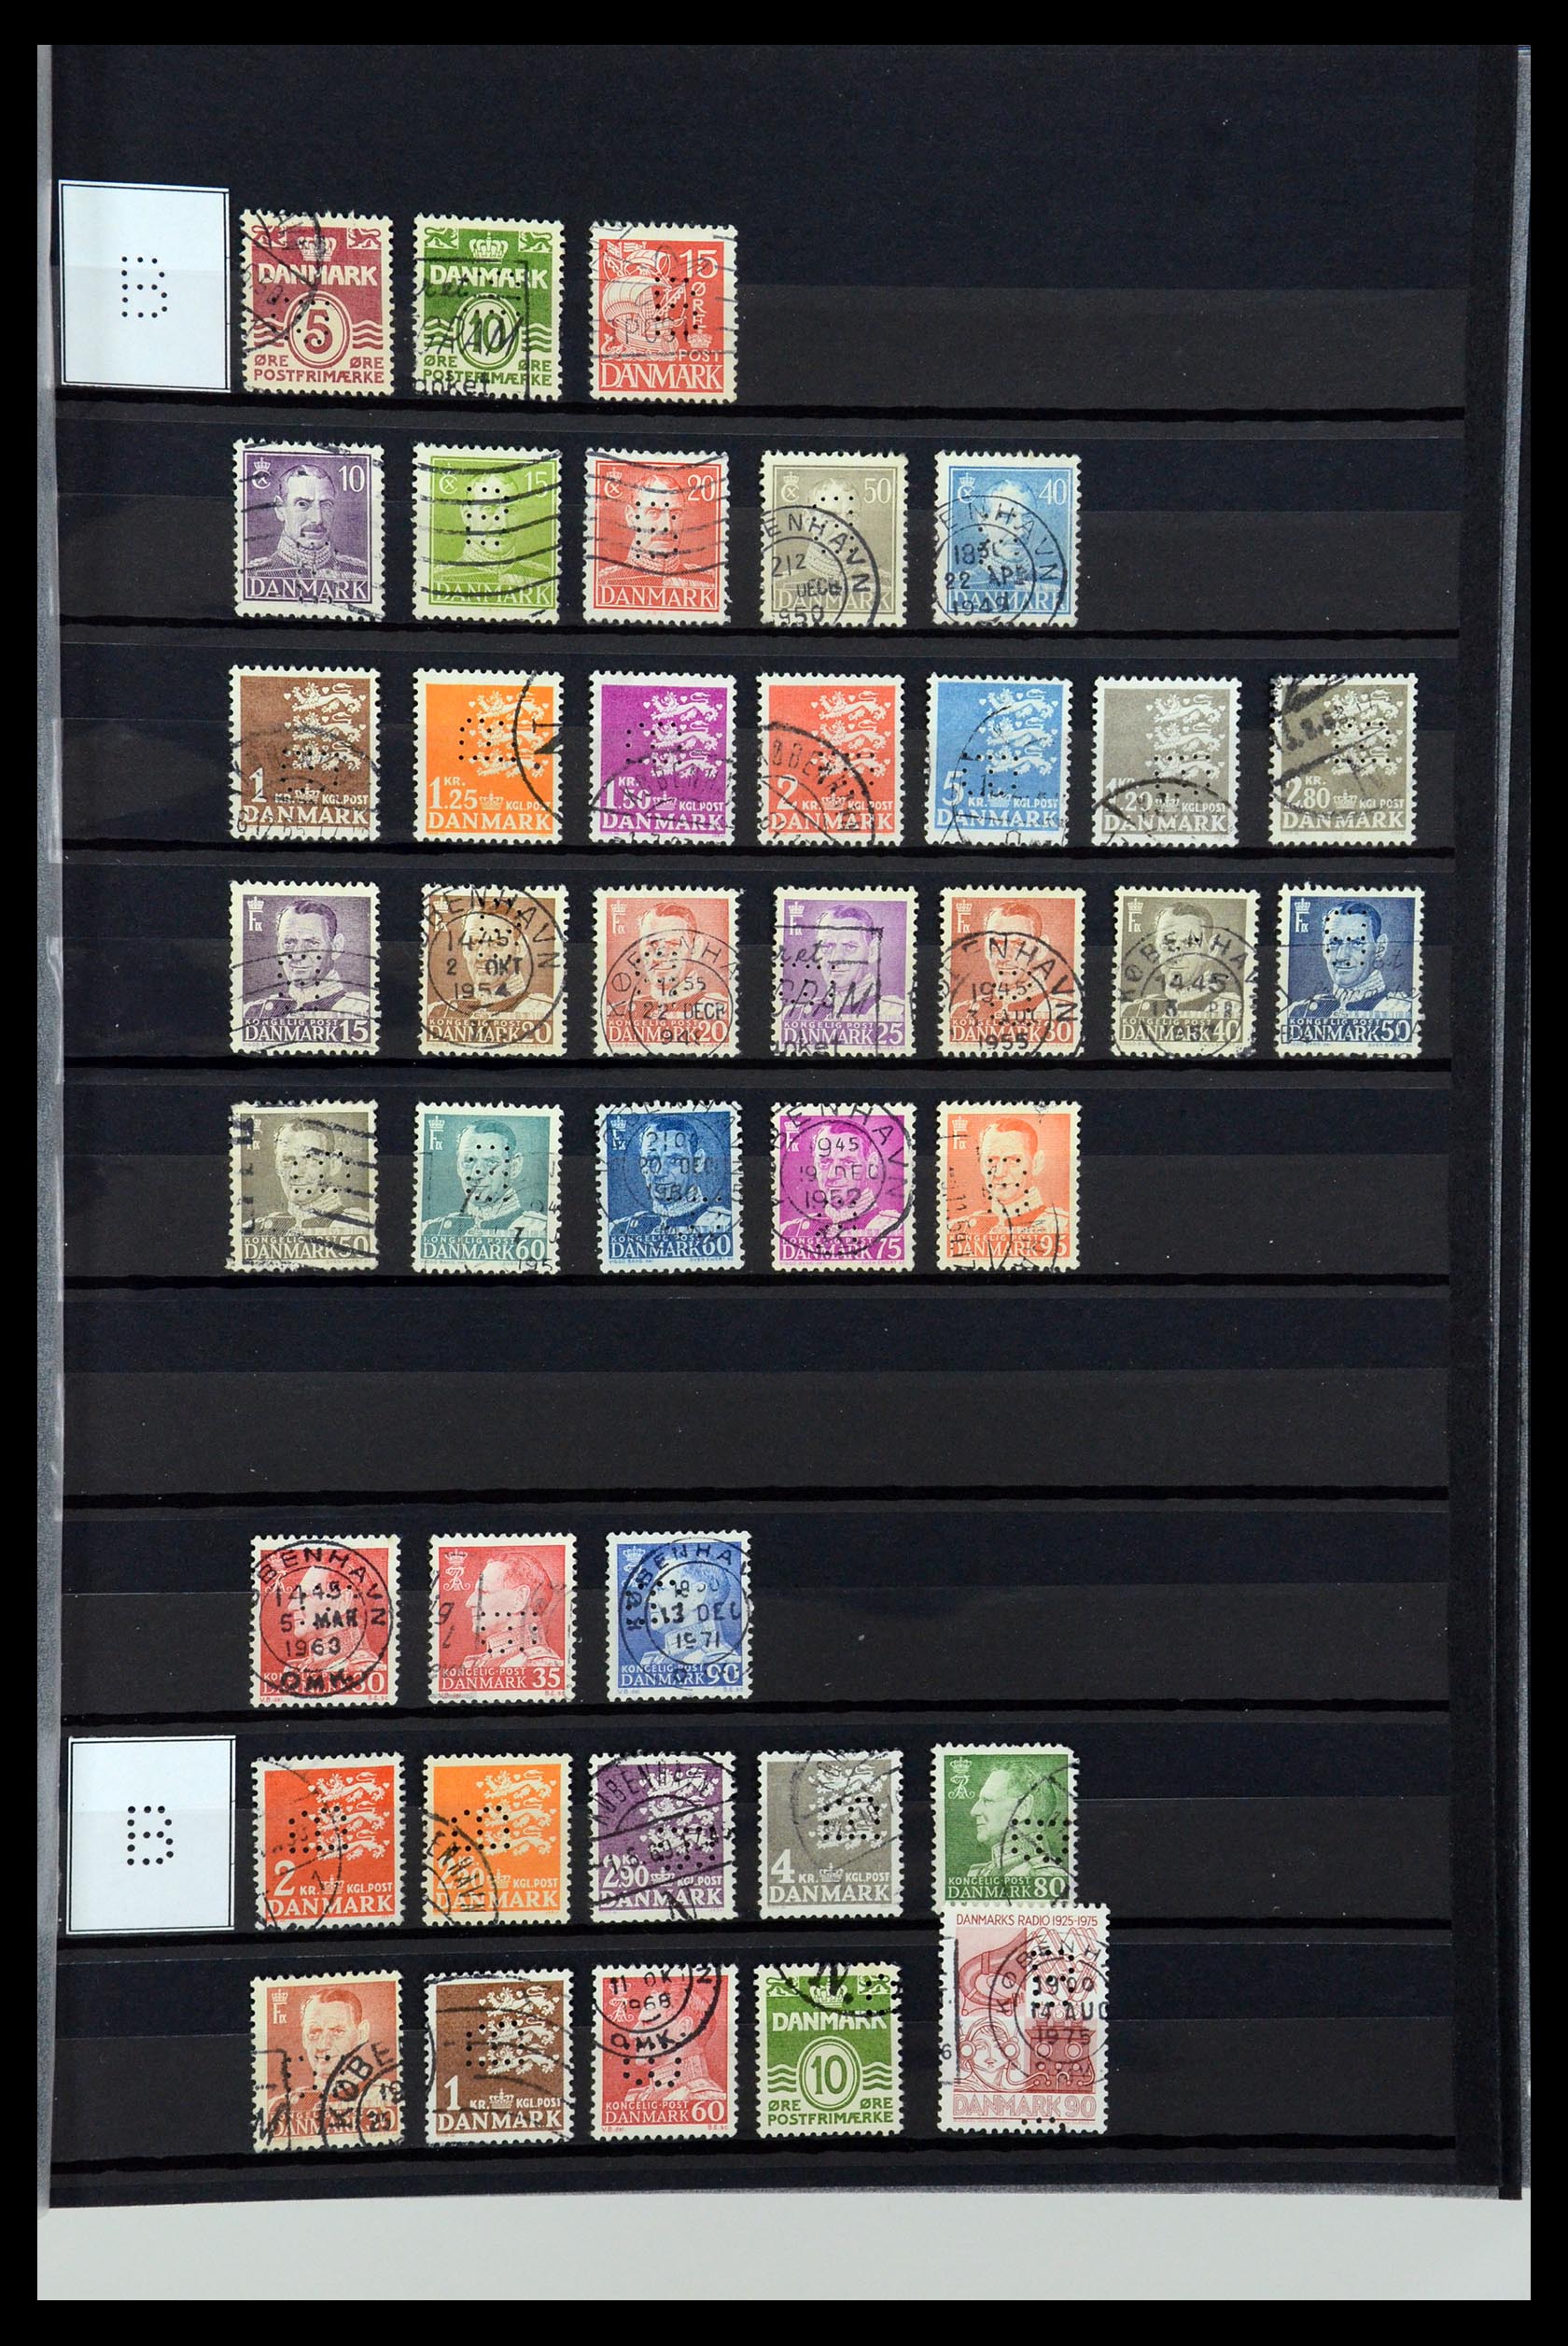 36396 013 - Stamp collection 36396 Denmark perfins.